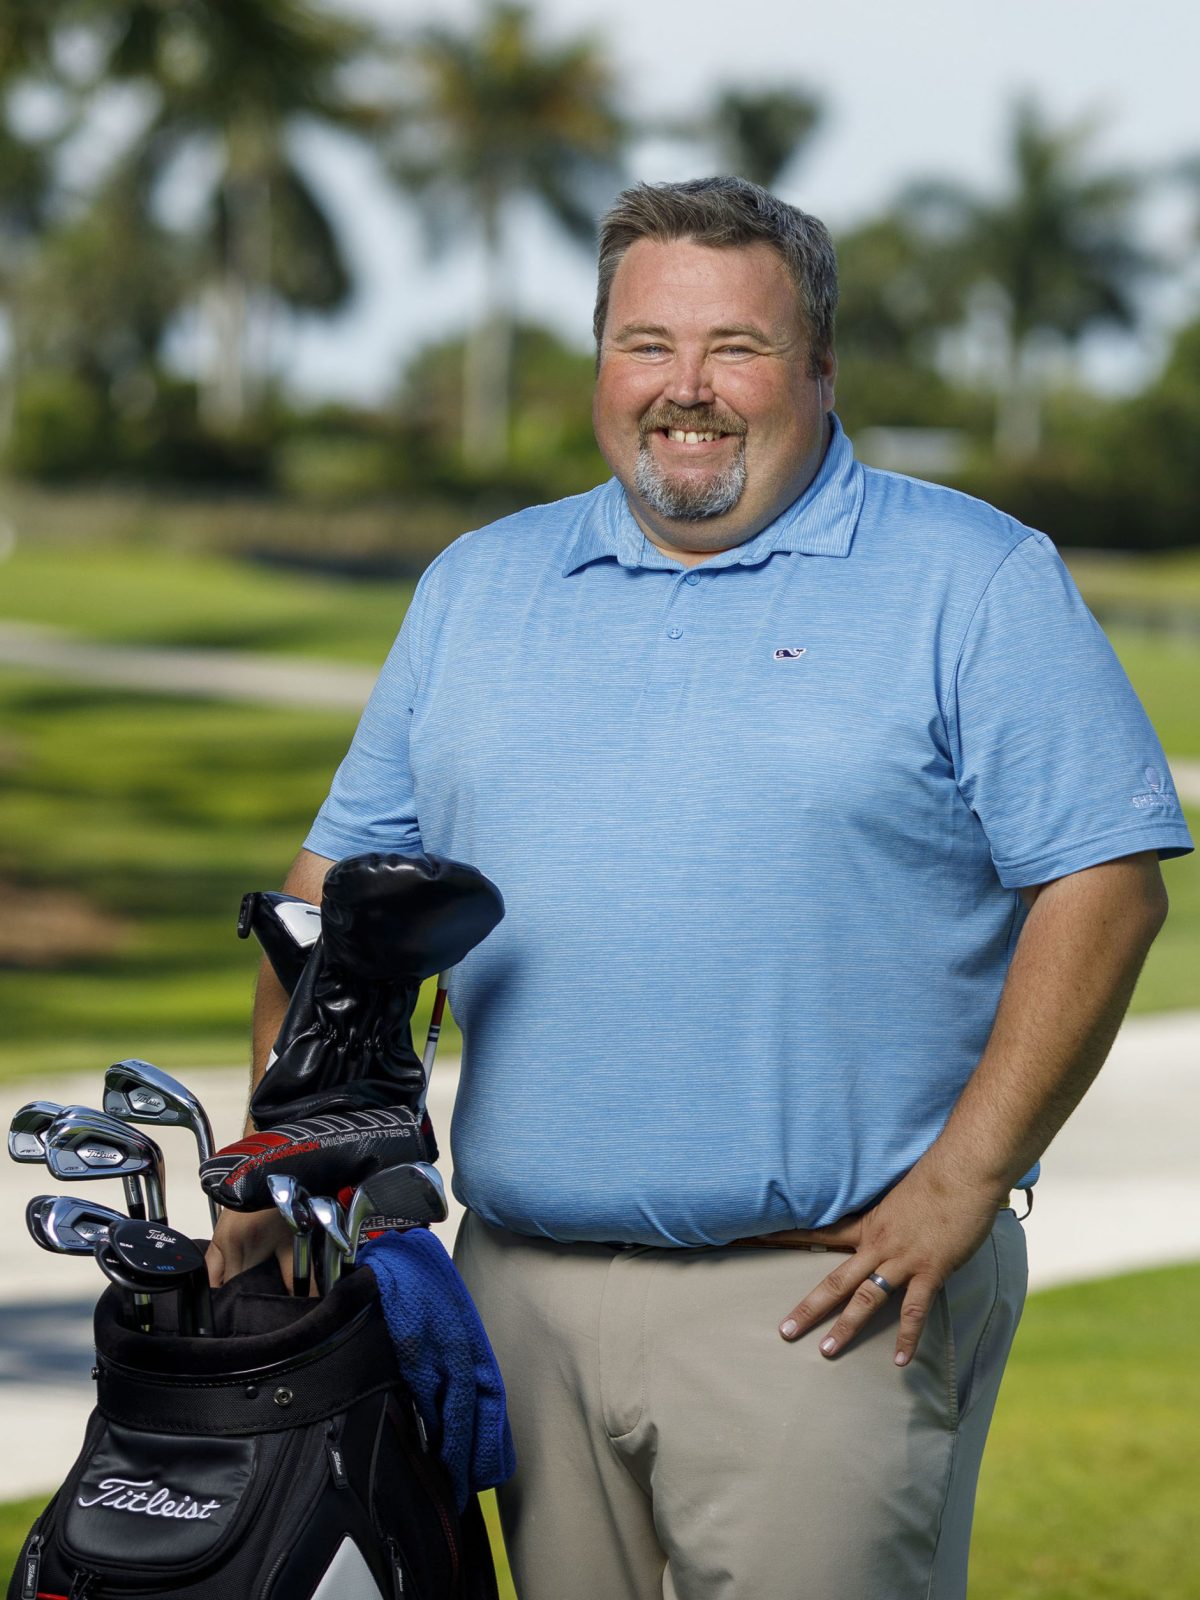 Paul Fitzpatrick, PGA Director of Golf